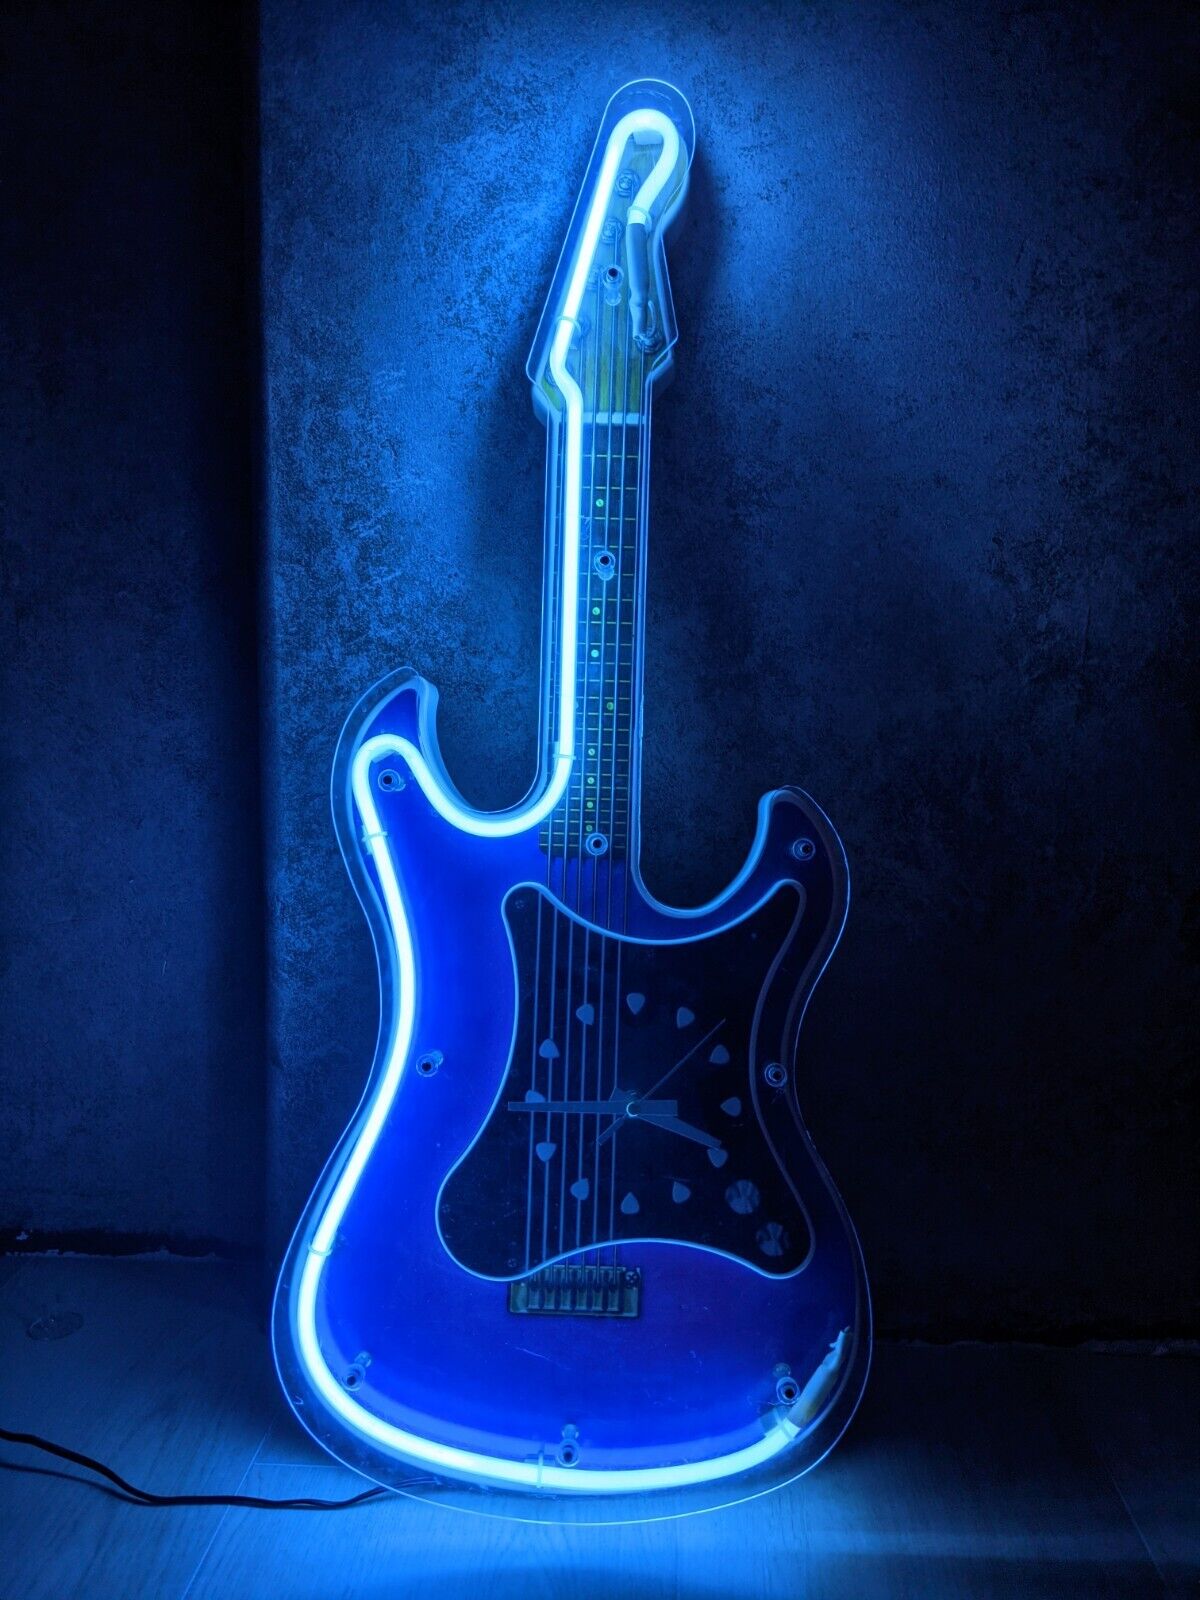 Retro Blue Neon Guitar Wall Clock Mancave Garage Light Lamp - Fully Working